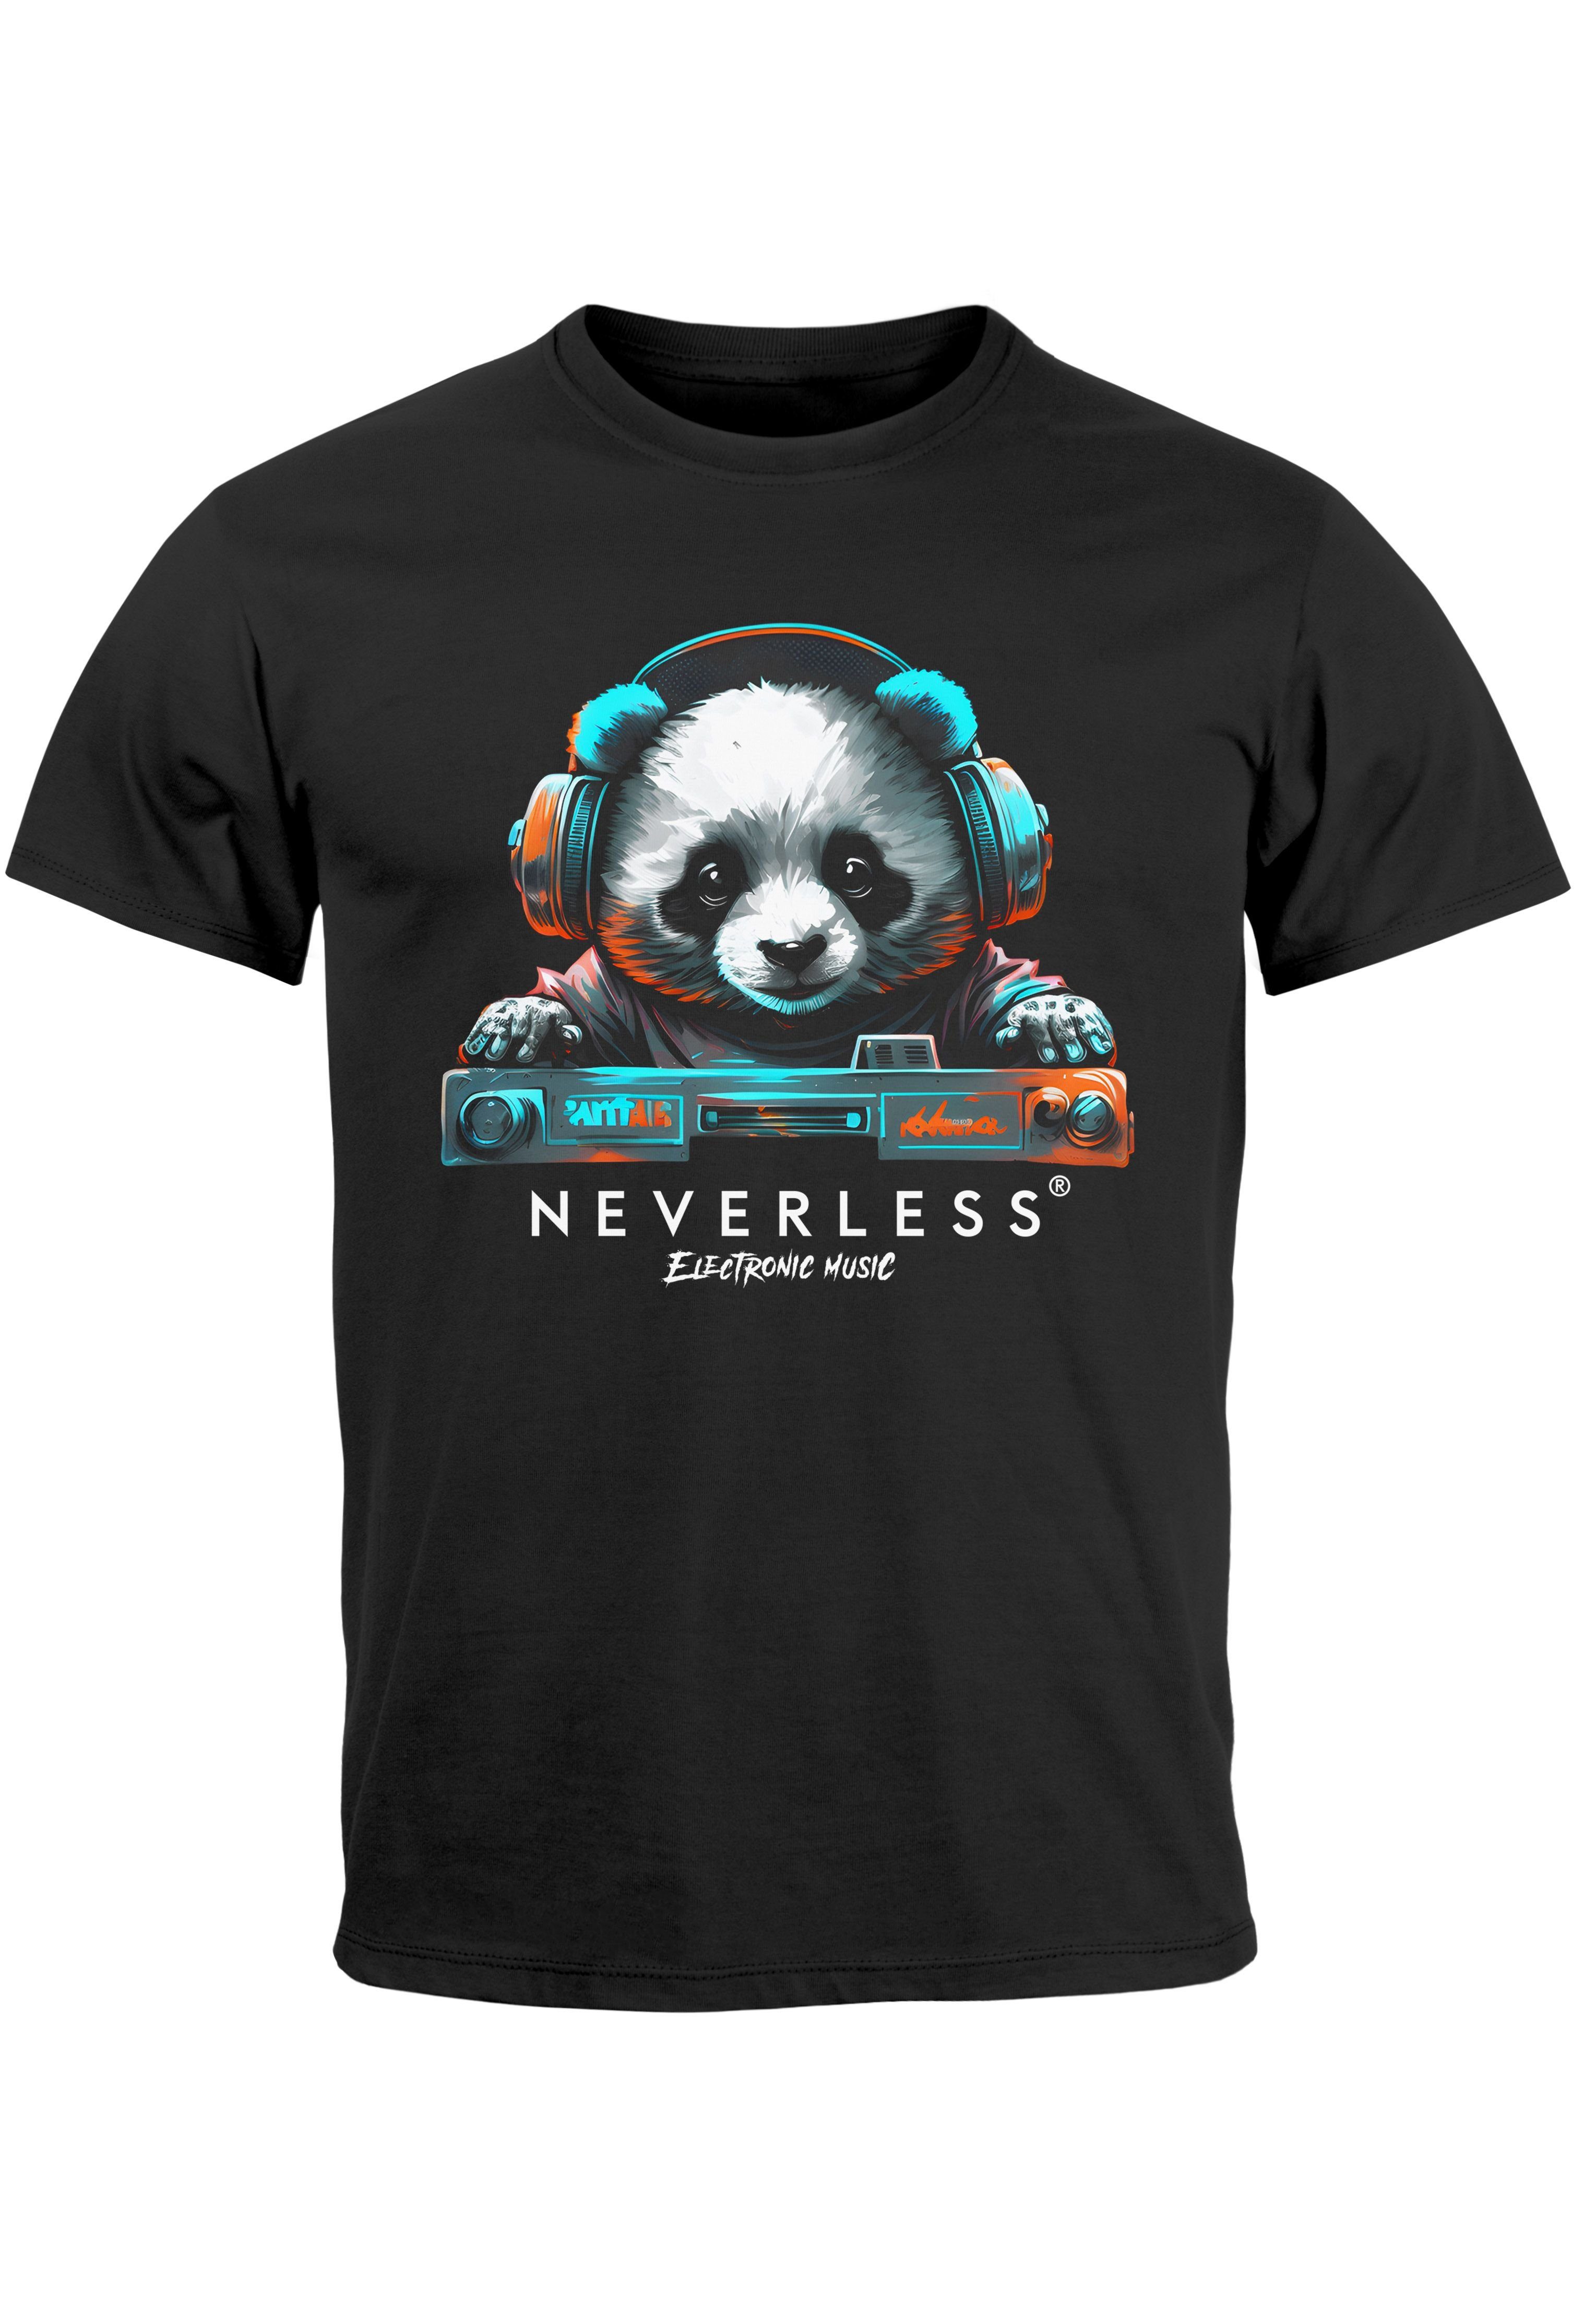 Aufdruck Print Herren schwarz Print Bär Fashion Techo mit Tiermotiv Panda Print-Shirt Neverless T-Shirt Musik